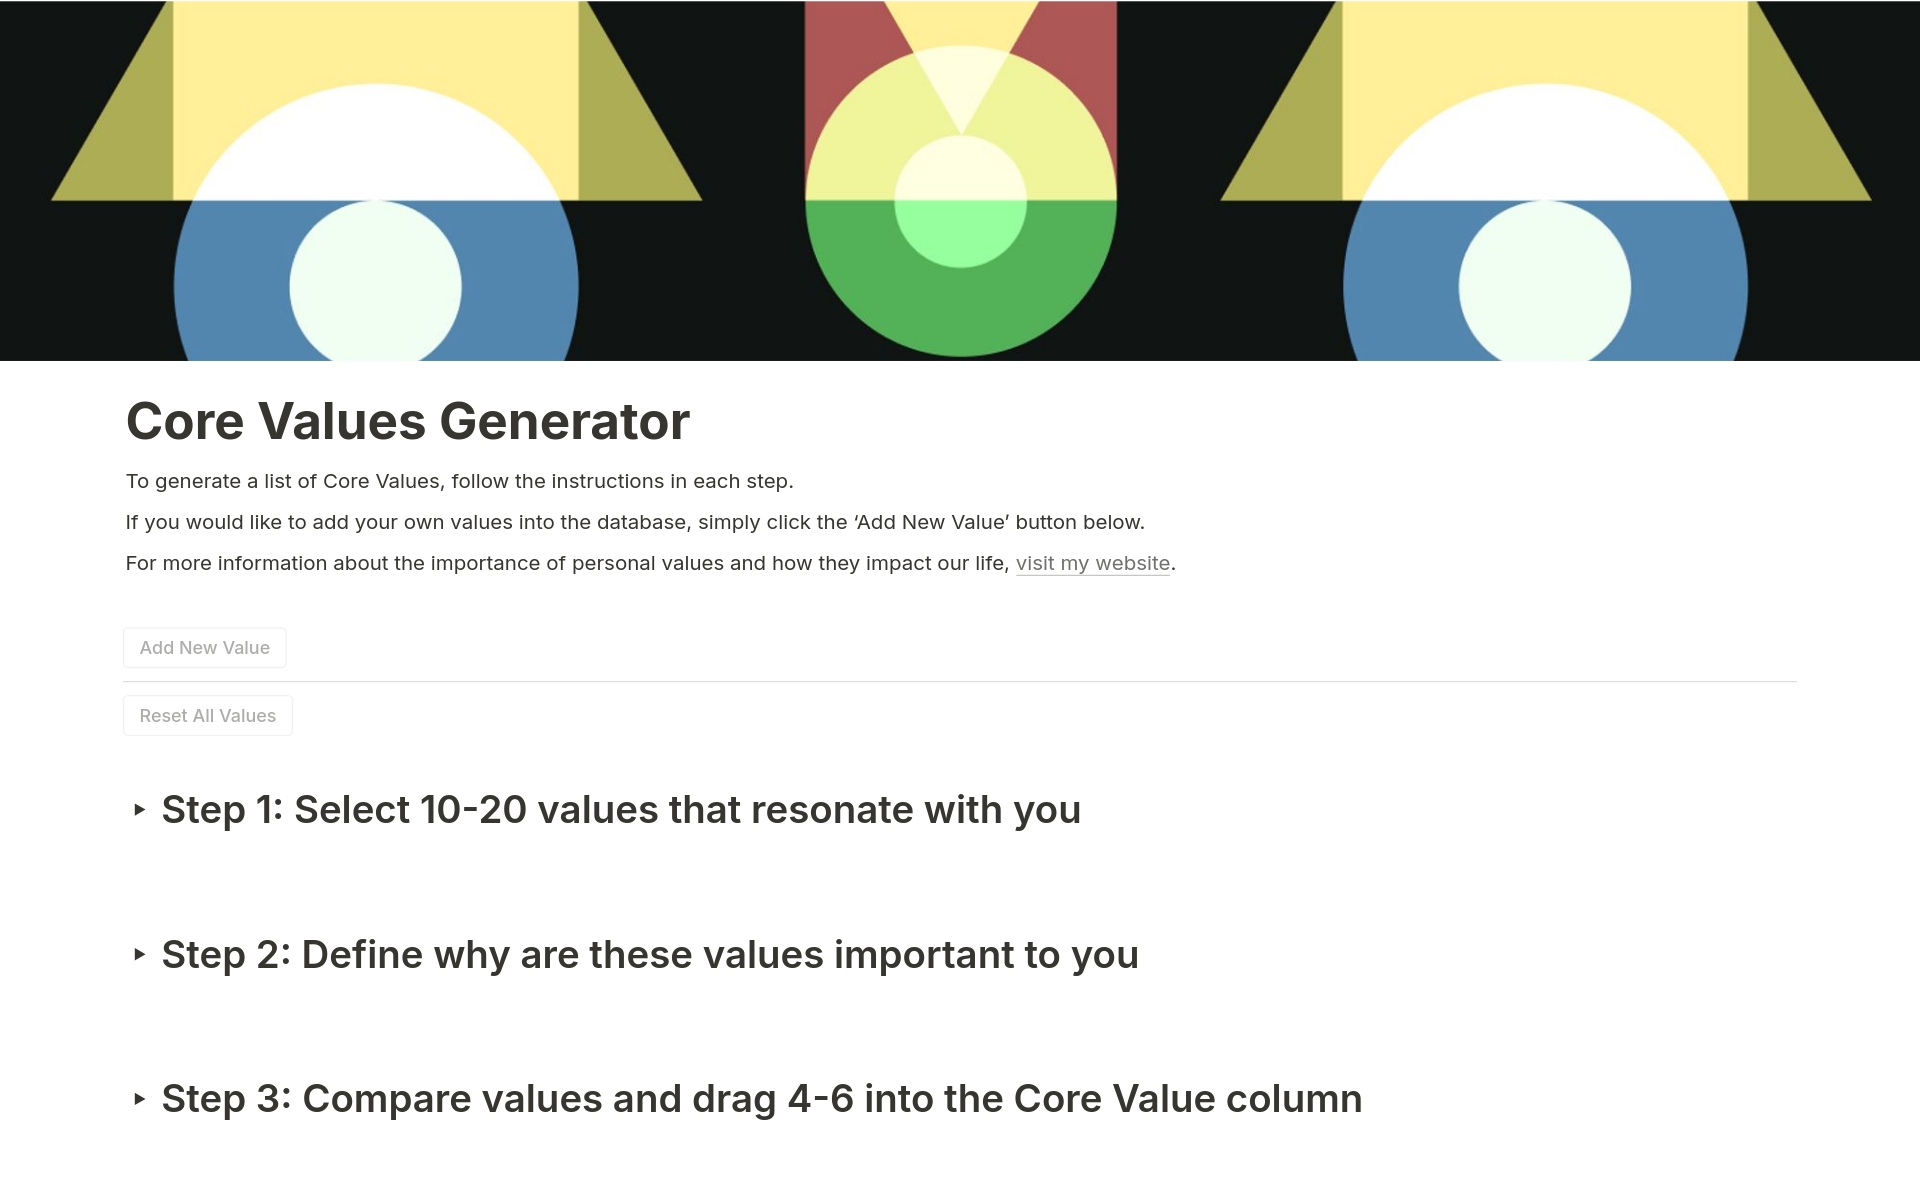 Aperçu du modèle de Core Values Generator